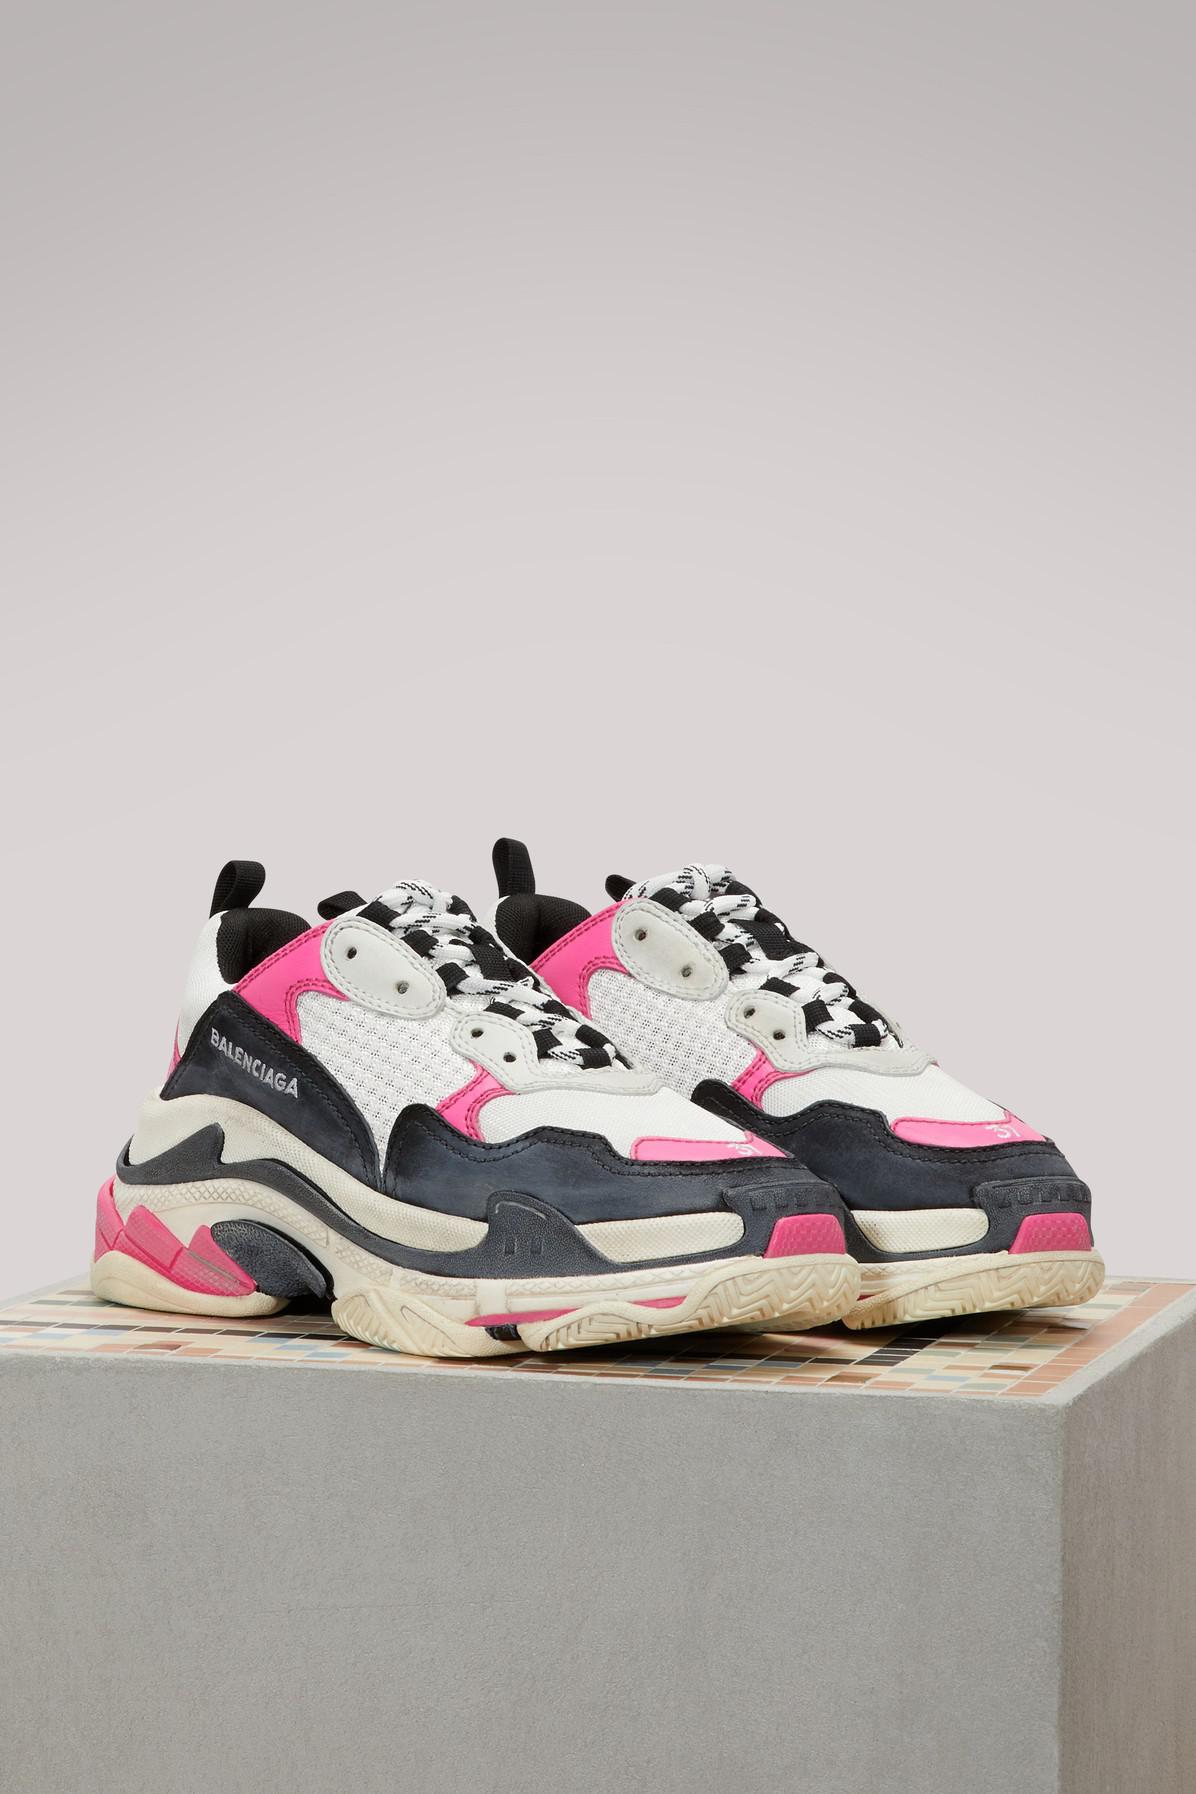 Balenciaga Triple S Sneakers in Pink - Lyst